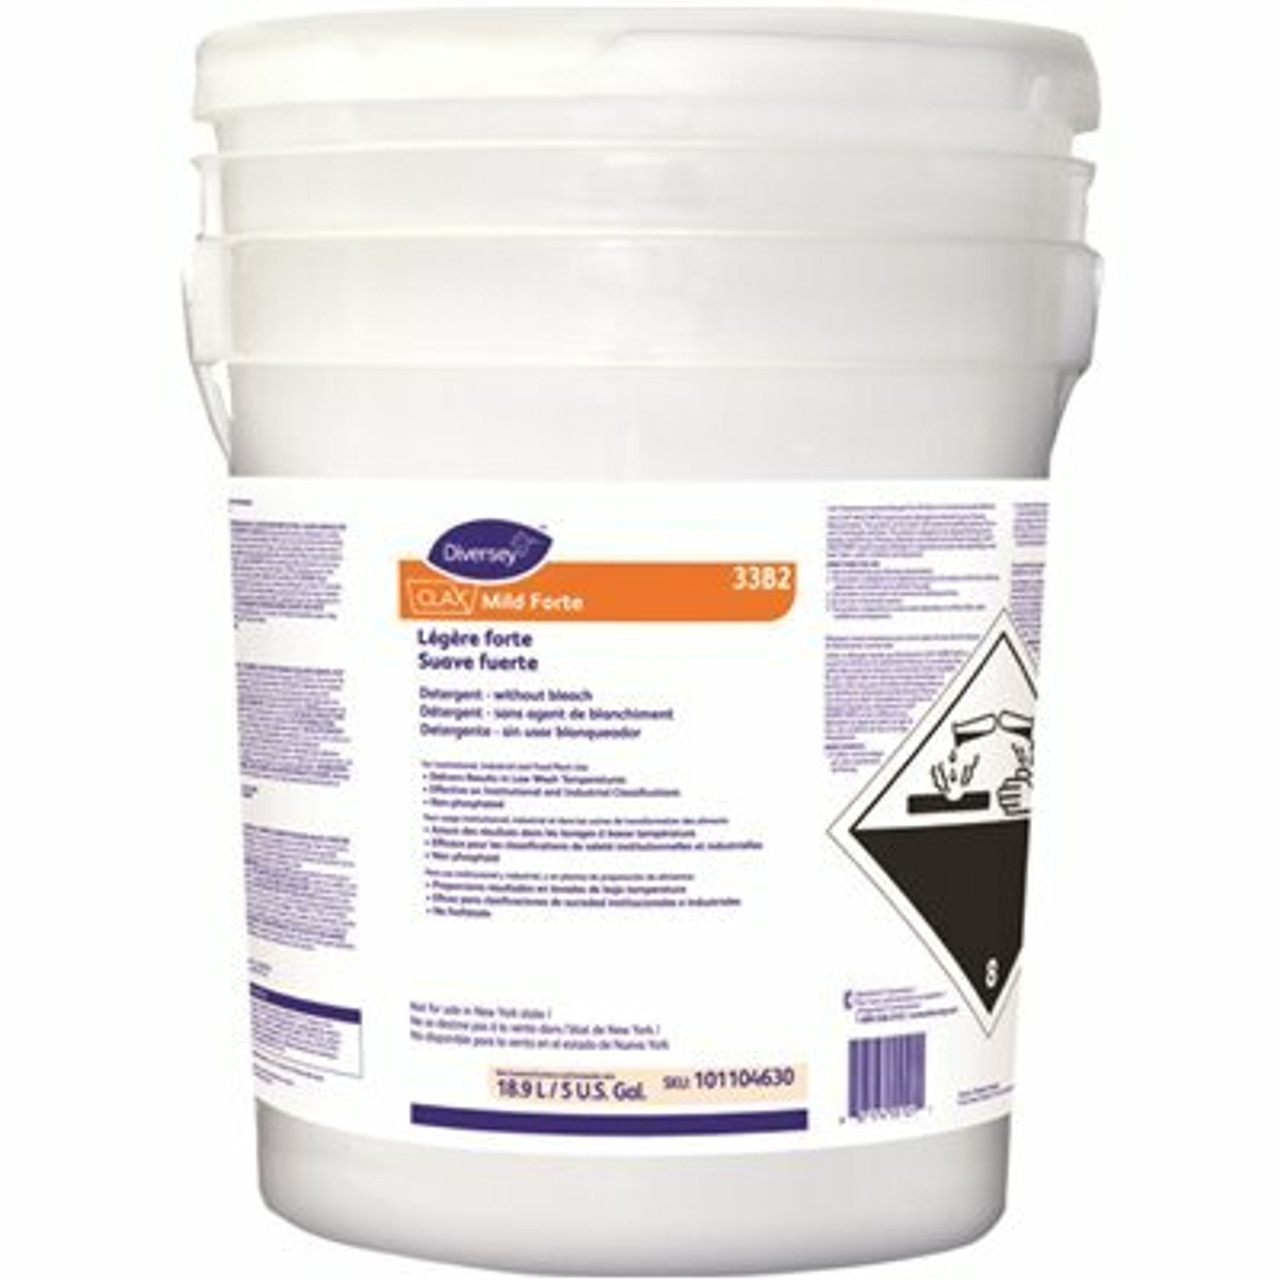 Diversey Clax Mild Forte 33B2 5 Gal. Surfactant Liquid Laundry Detergent Without Bleach (240 Loads)